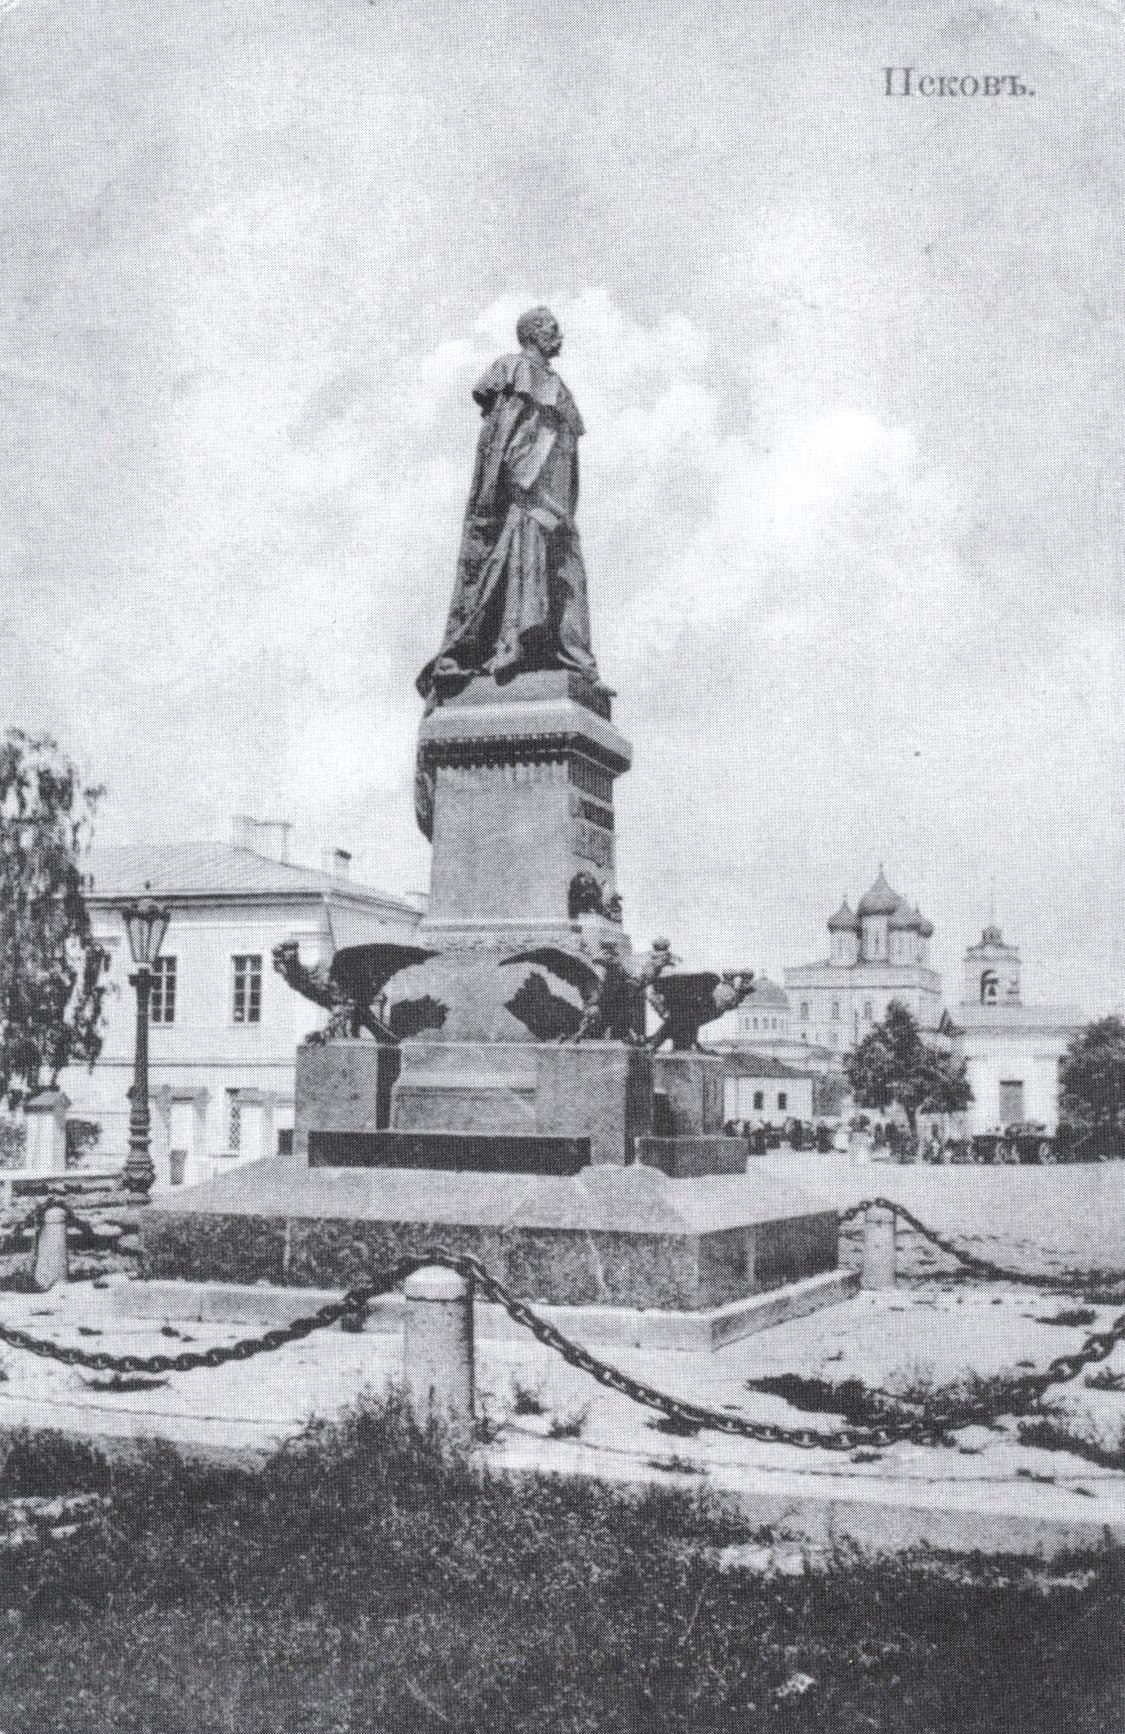 Псков. Памятник Александру II.